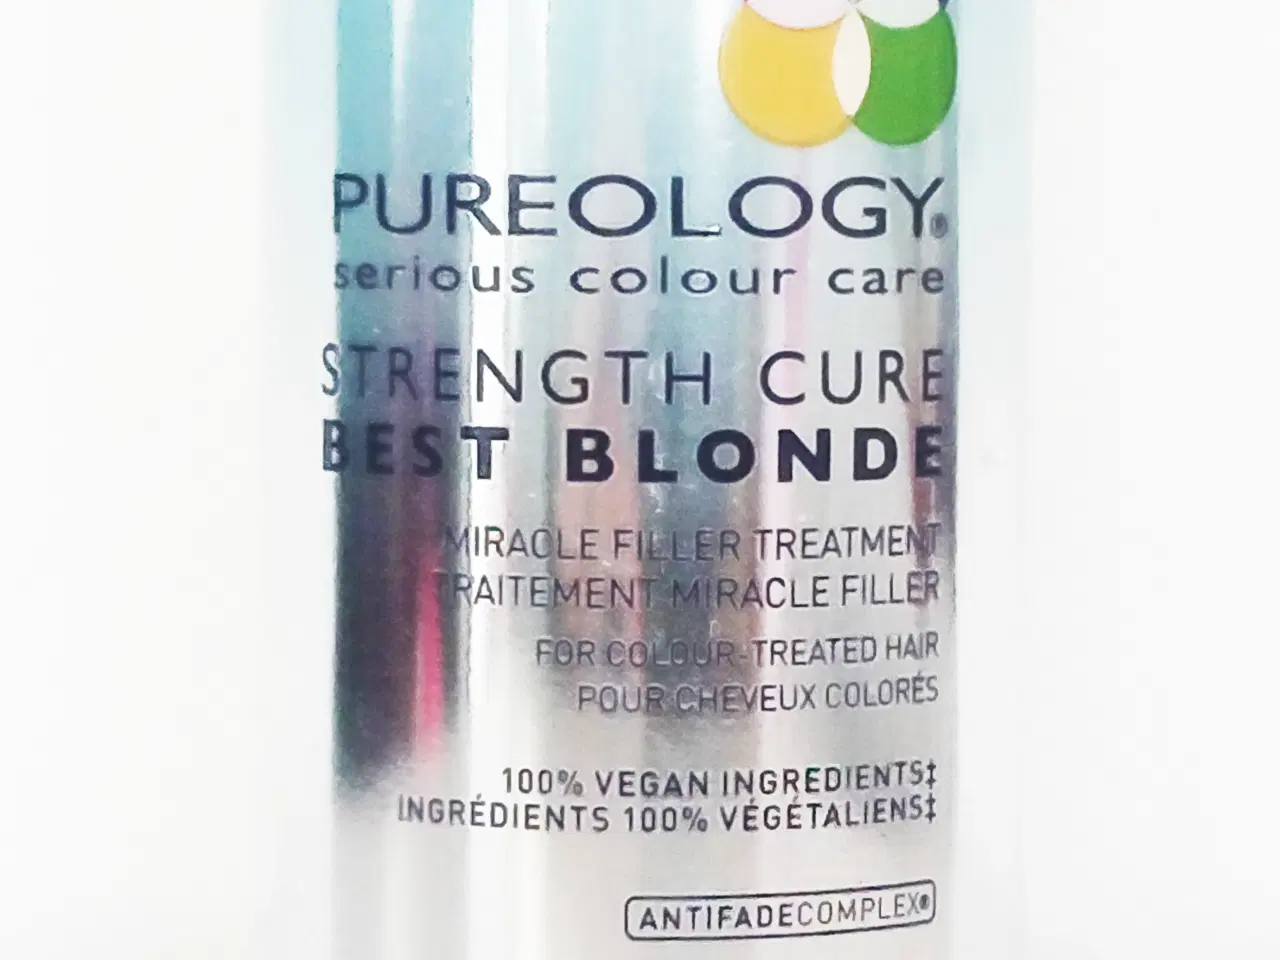 Billede 3 - Pureology Strength Cure Best Blonde Miracle Filler